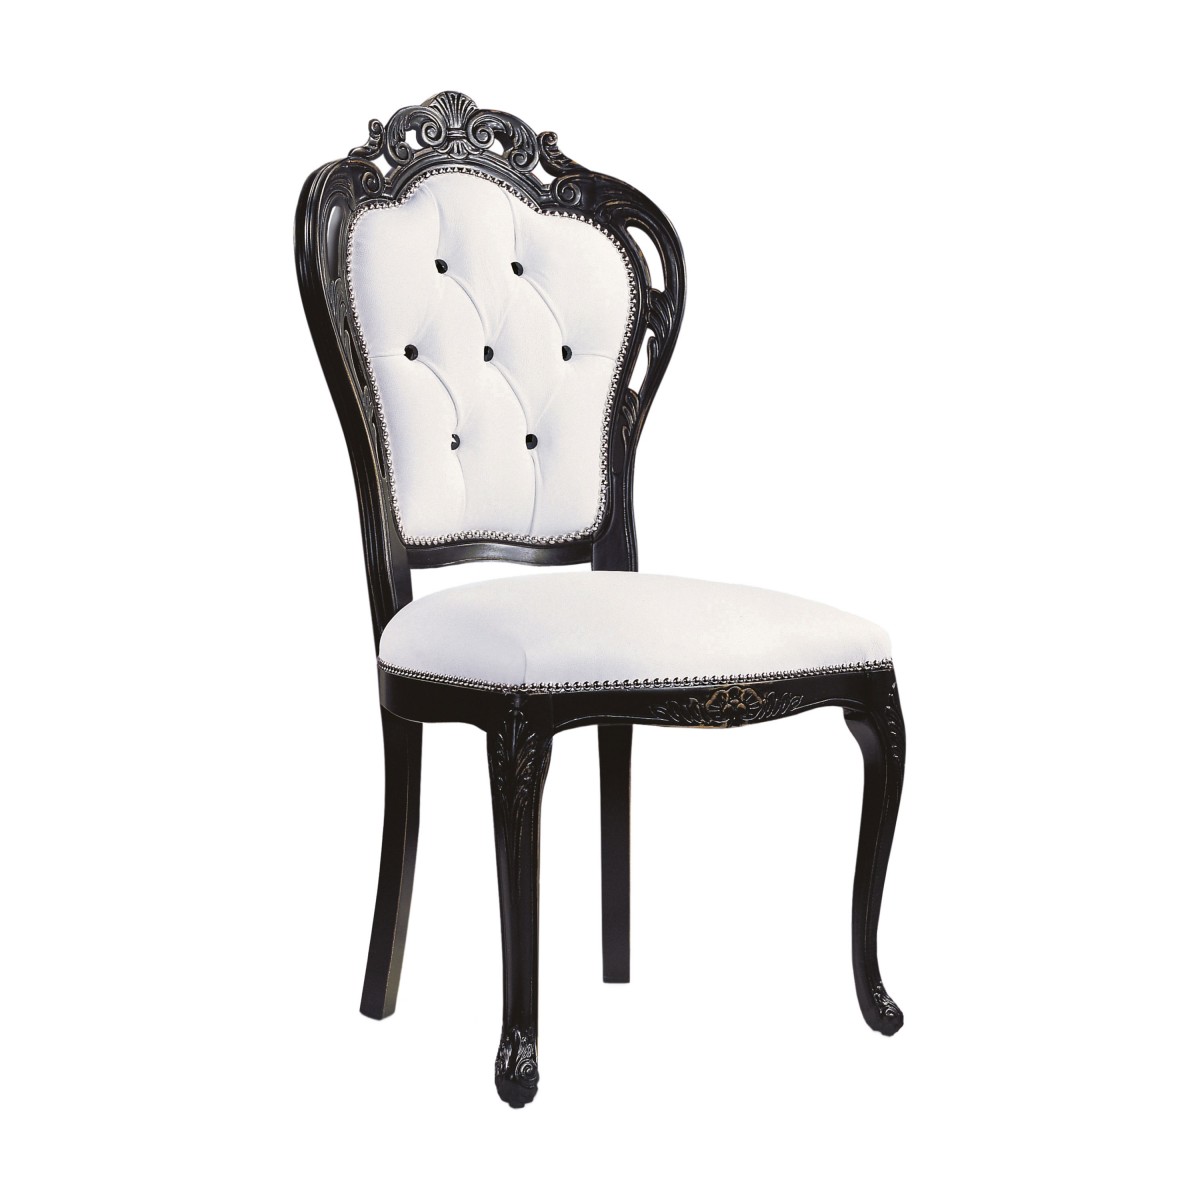 italian classic chair traforata 7520